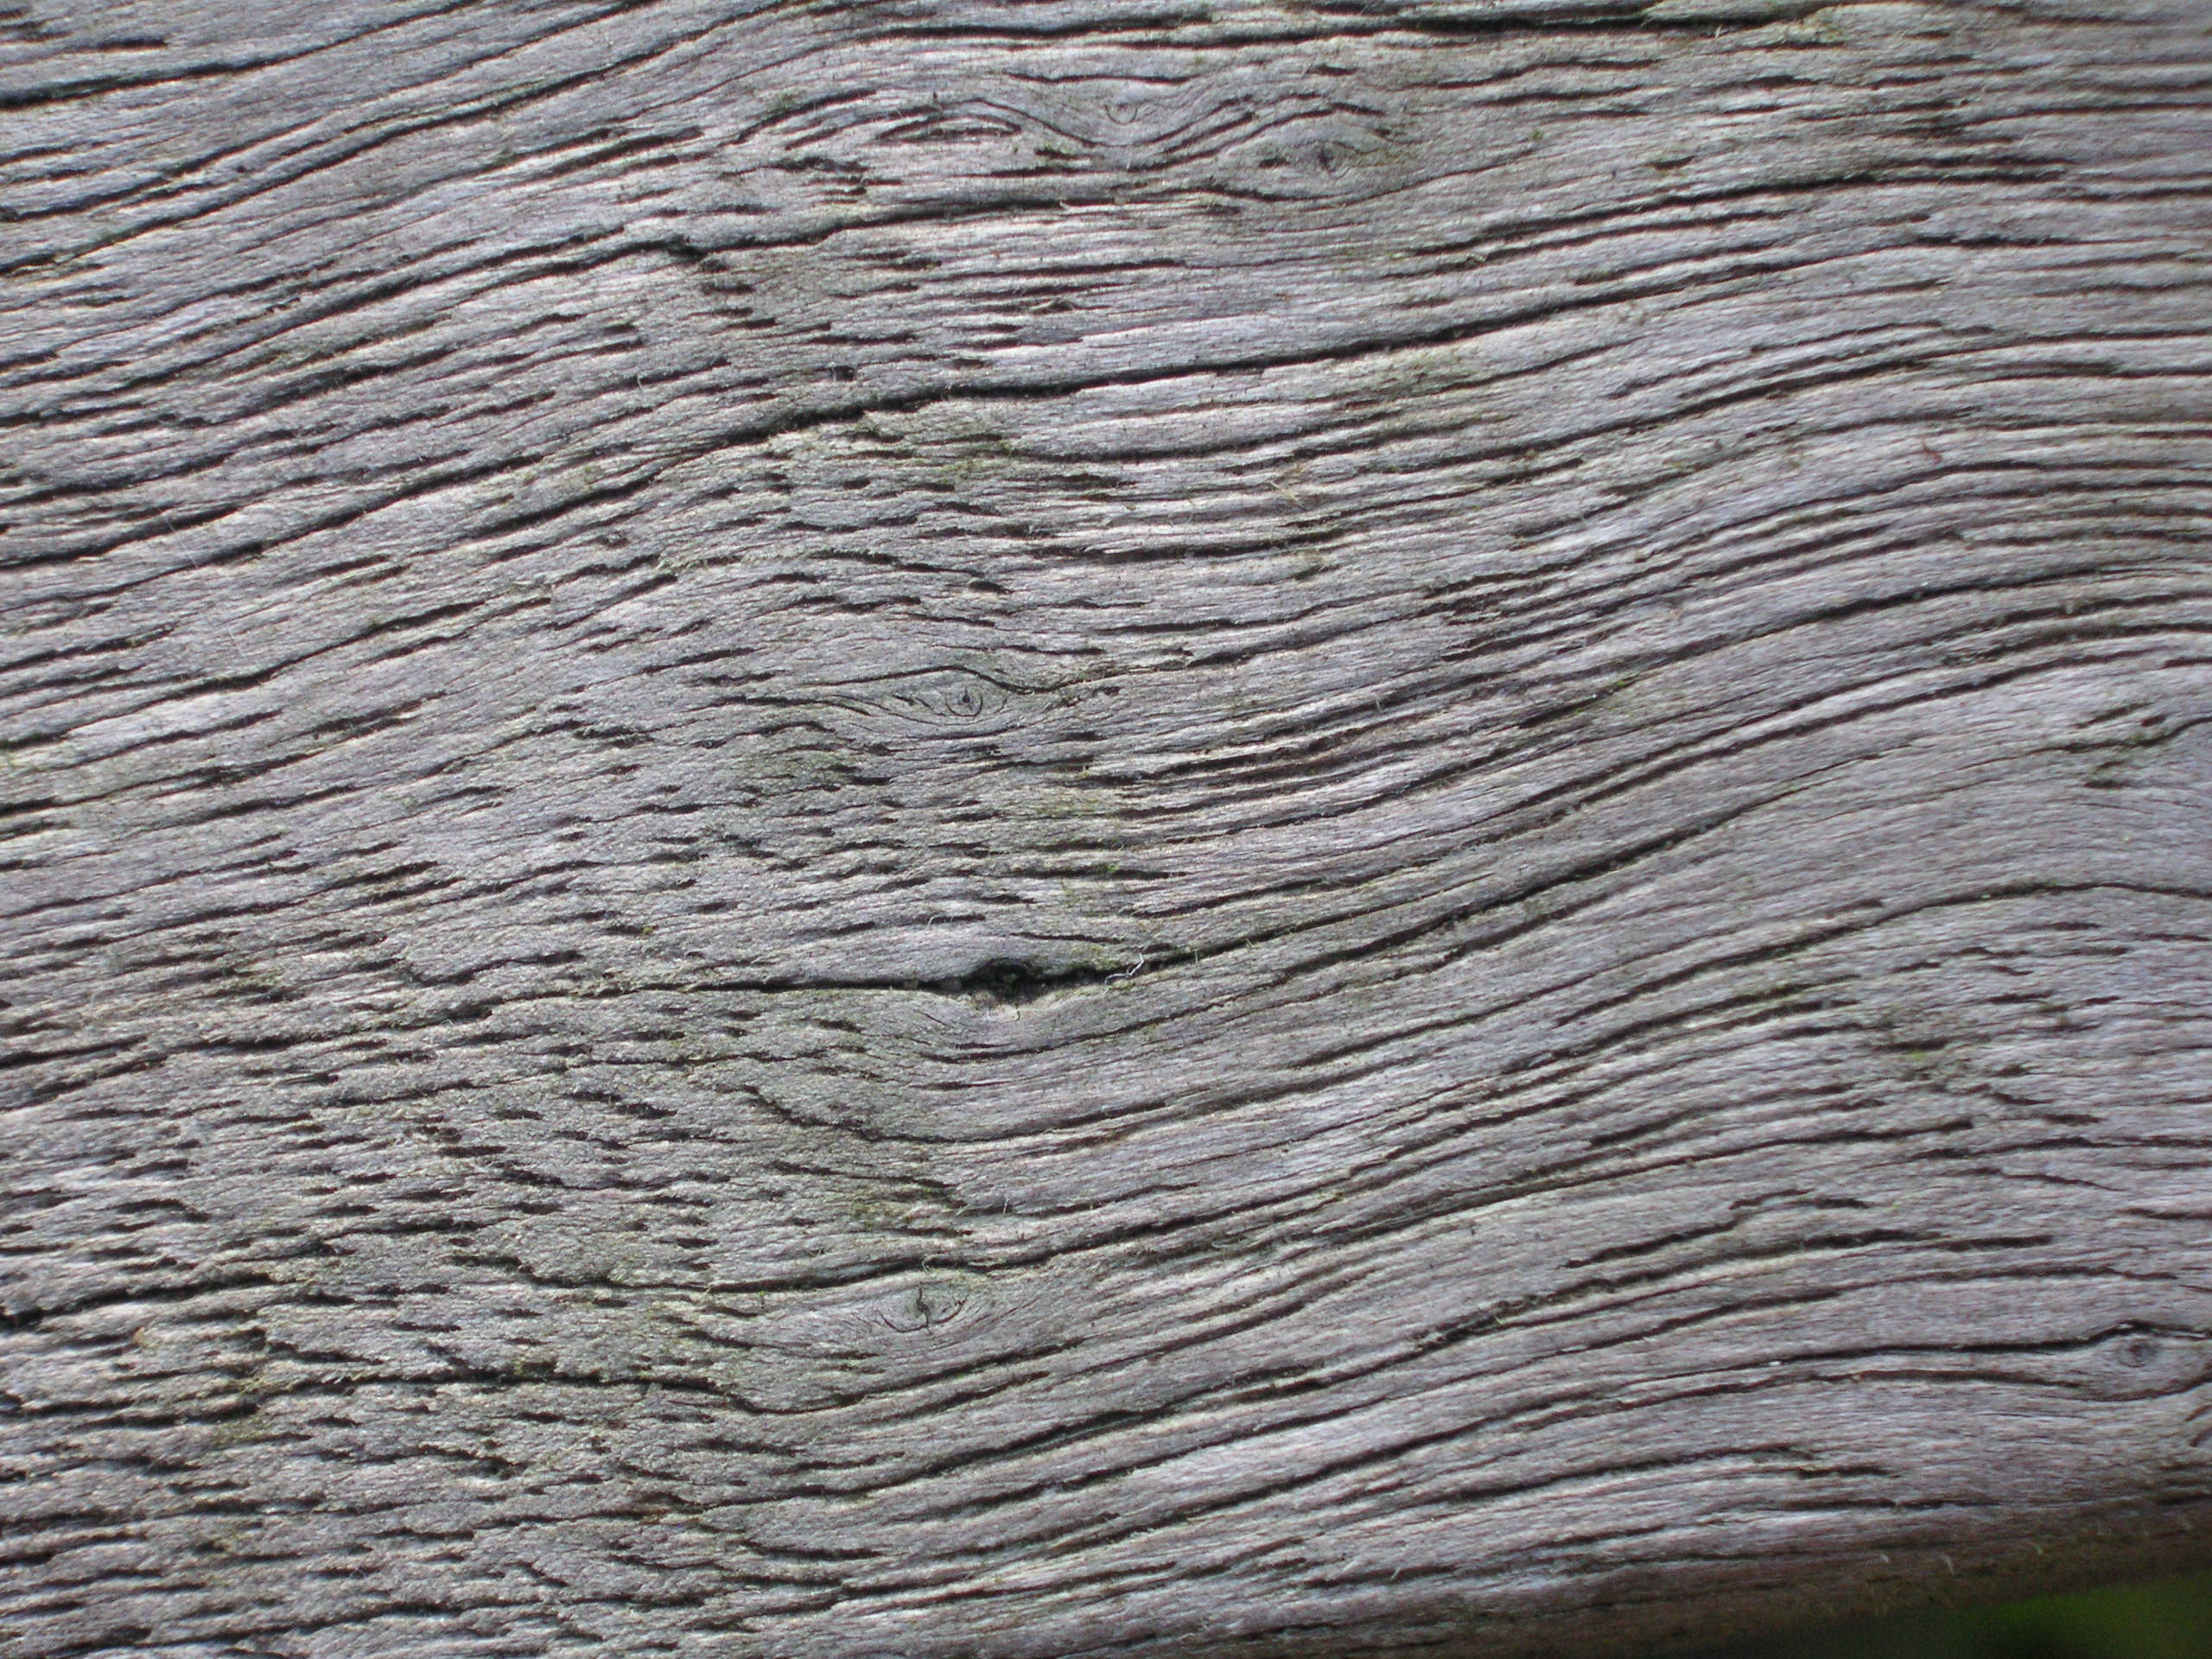 File:Weathered wood grain.JPG - Wikimedia Commons